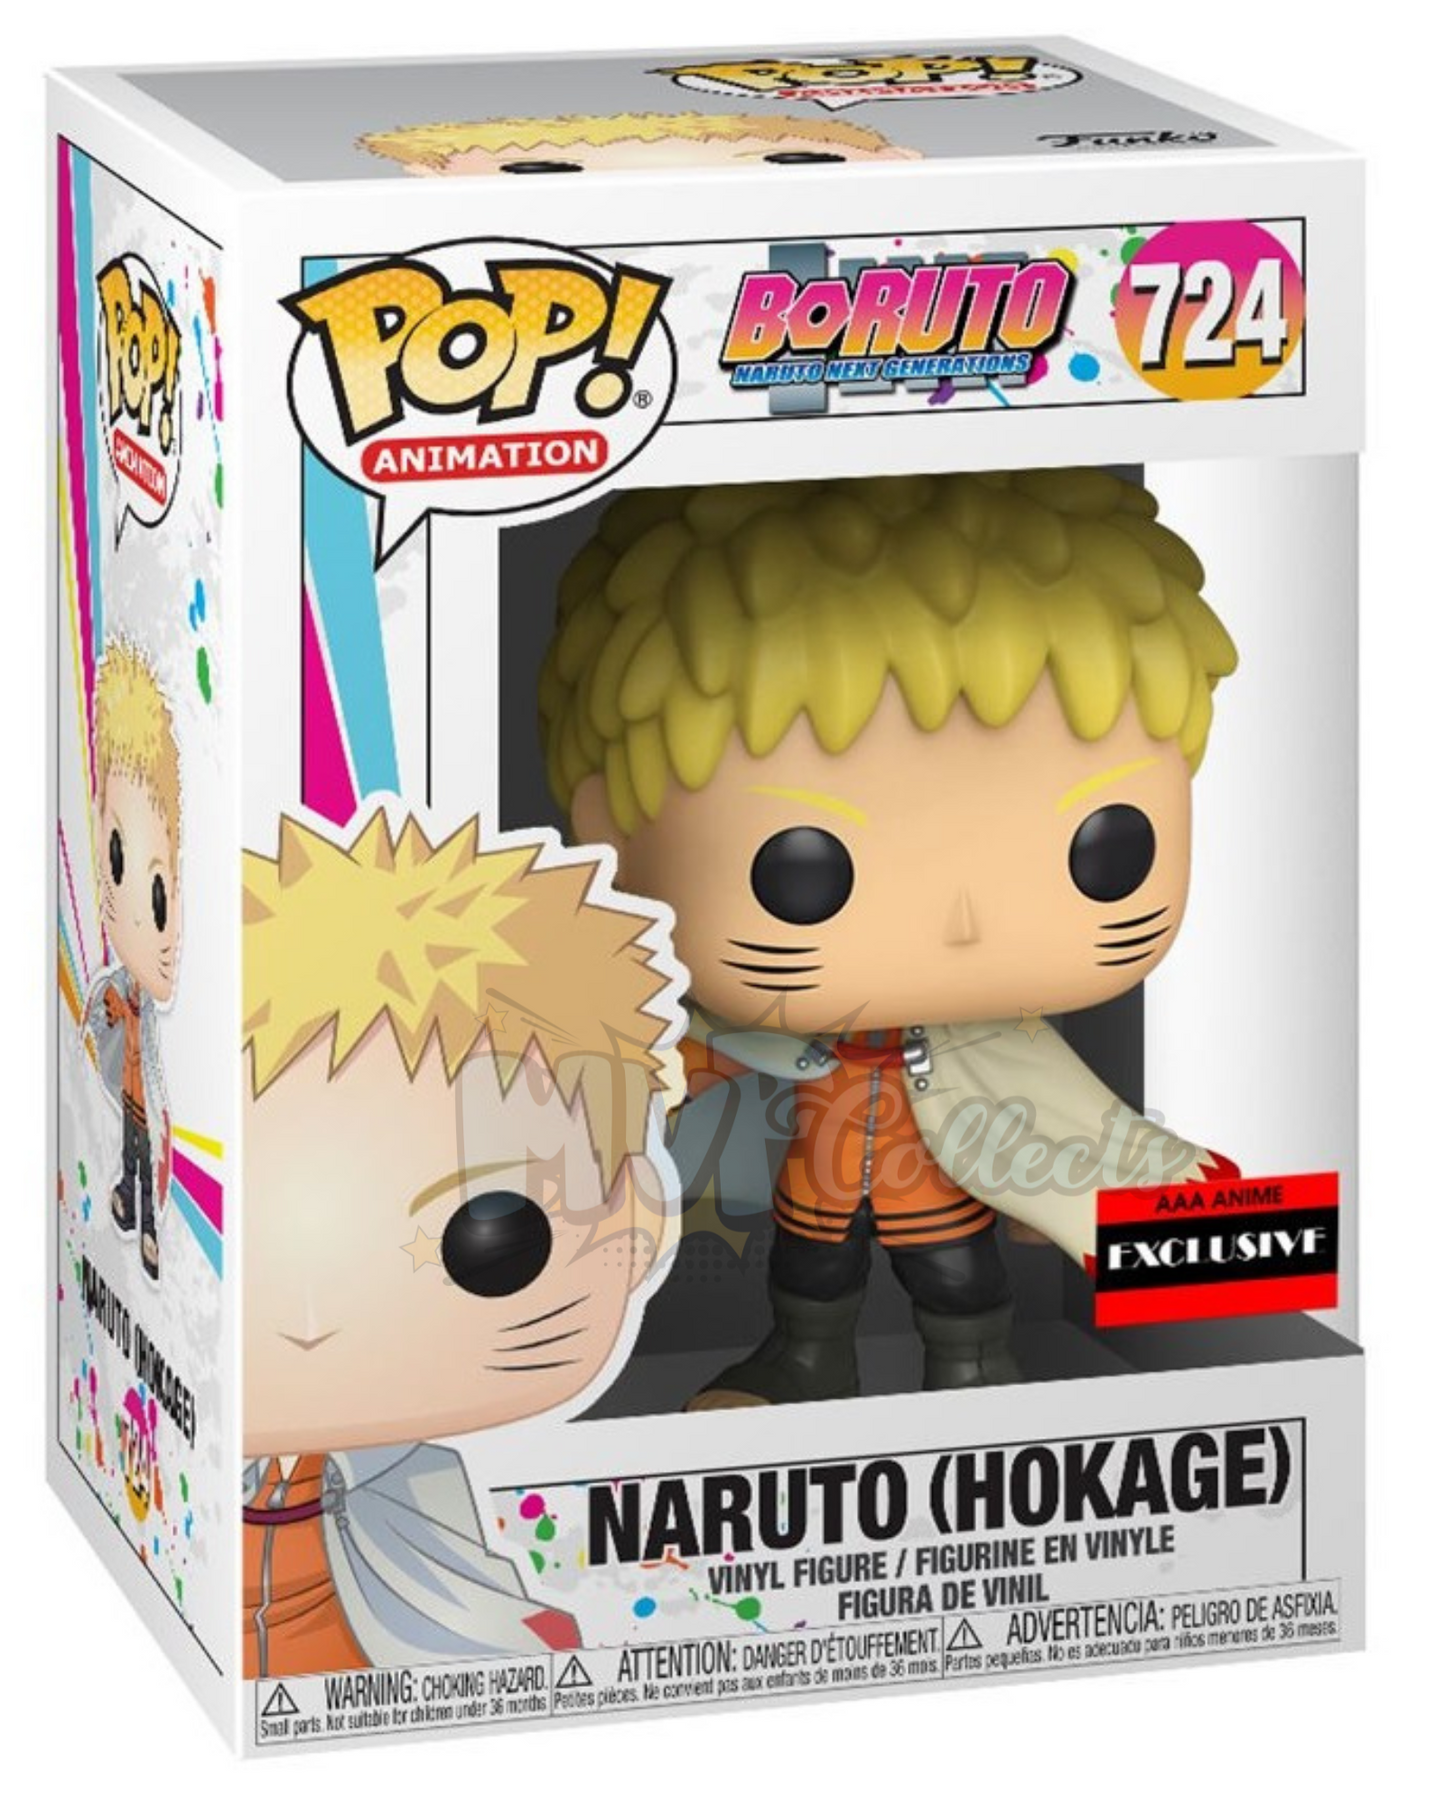 Naruto (Hokage) POP! (Naruto) 724 AAA Exclusive